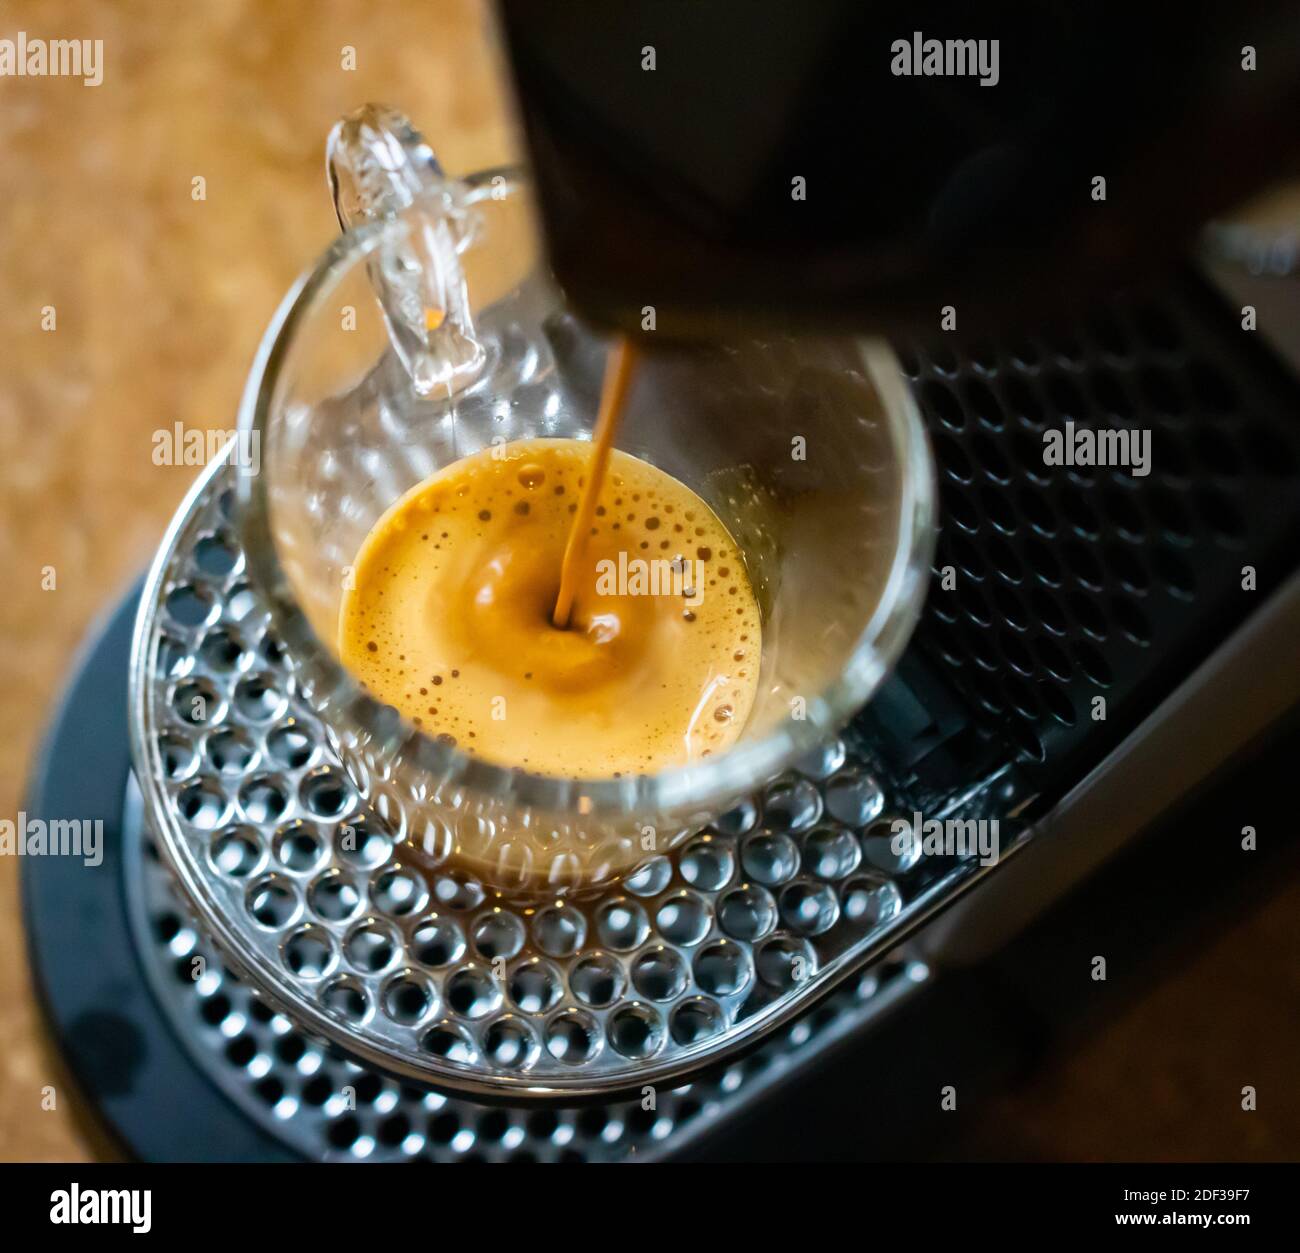 https://c8.alamy.com/comp/2DF39F7/espresso-coffee-brewing-process-from-typical-italian-coffee-espresso-machine-2DF39F7.jpg